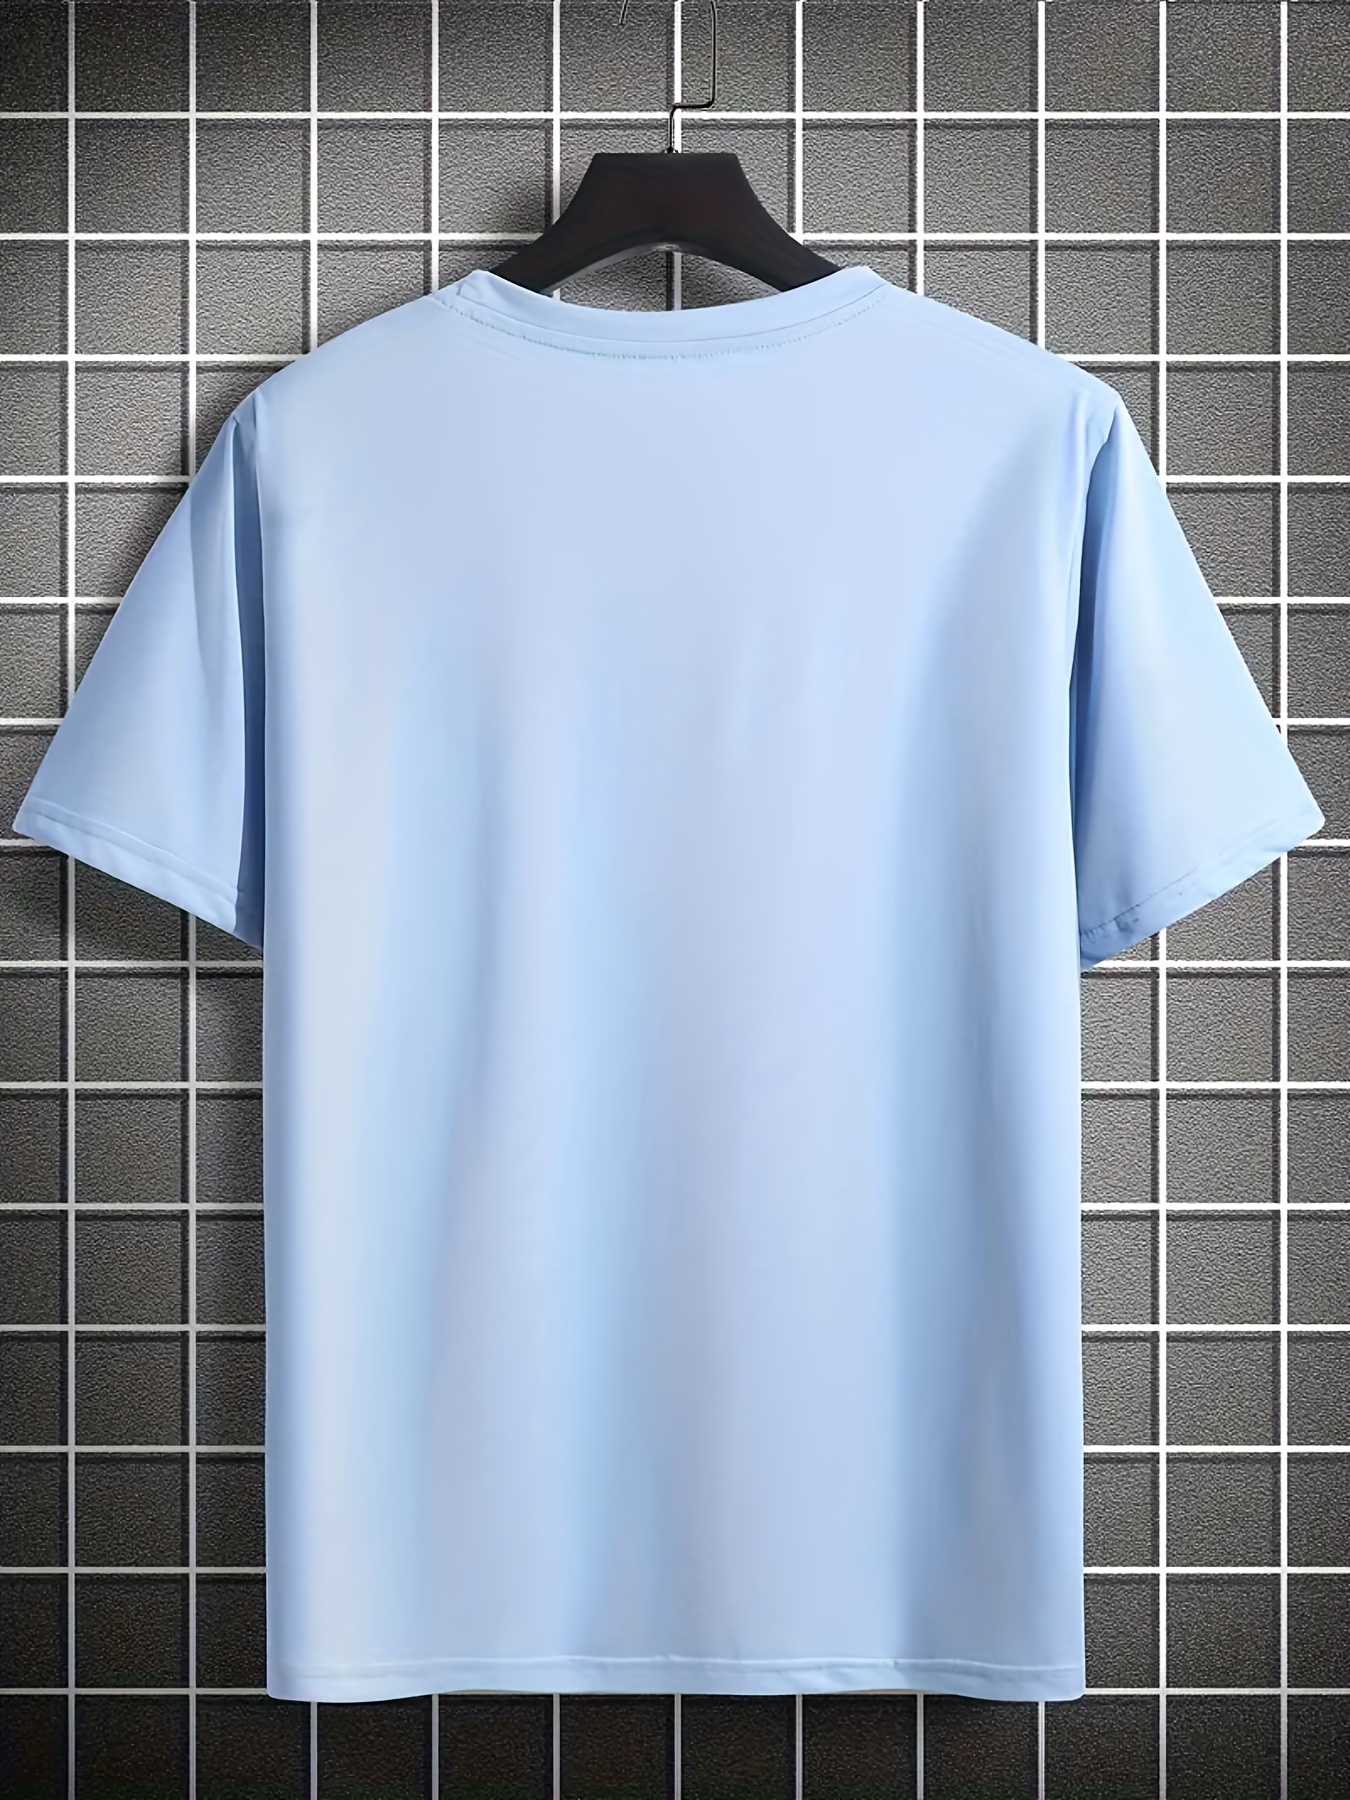 Camiseta Nequm Cafe Estampado .Compra Online